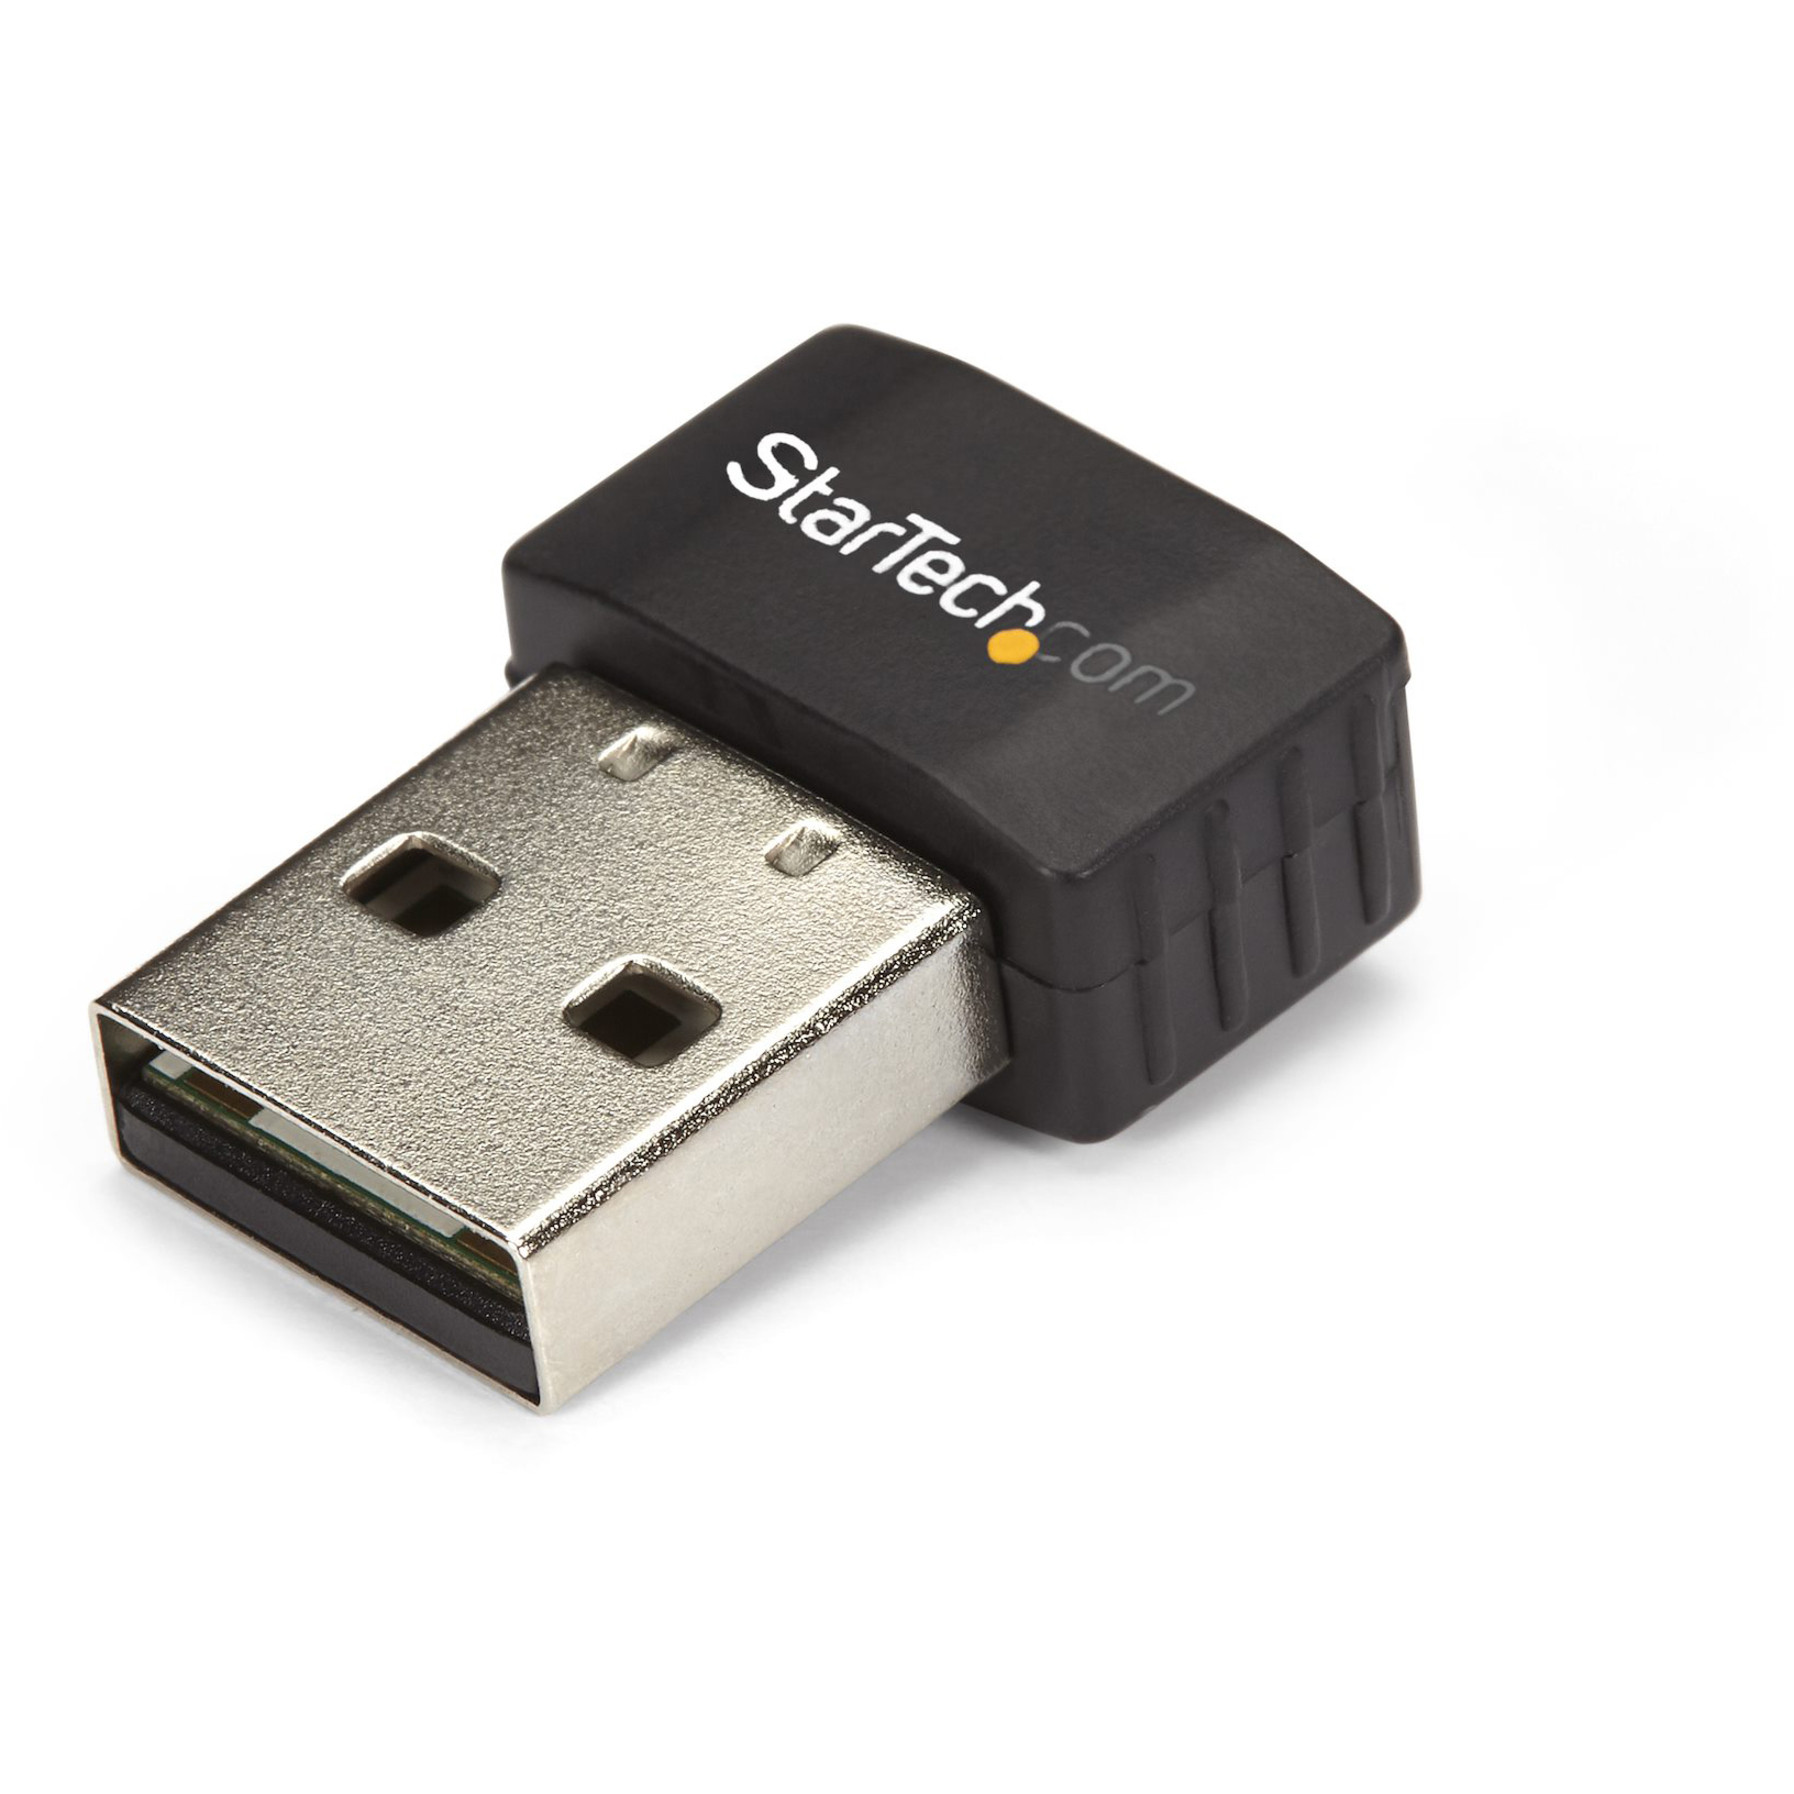 Startech .com USB WiFi AdapterAC600Dual-Band Nano USB Wireless Network Adapter1T1R 802.11ac Wi-Fi Adapter2.4GHz / 5GHzAdd rel… USB433ACD1X1